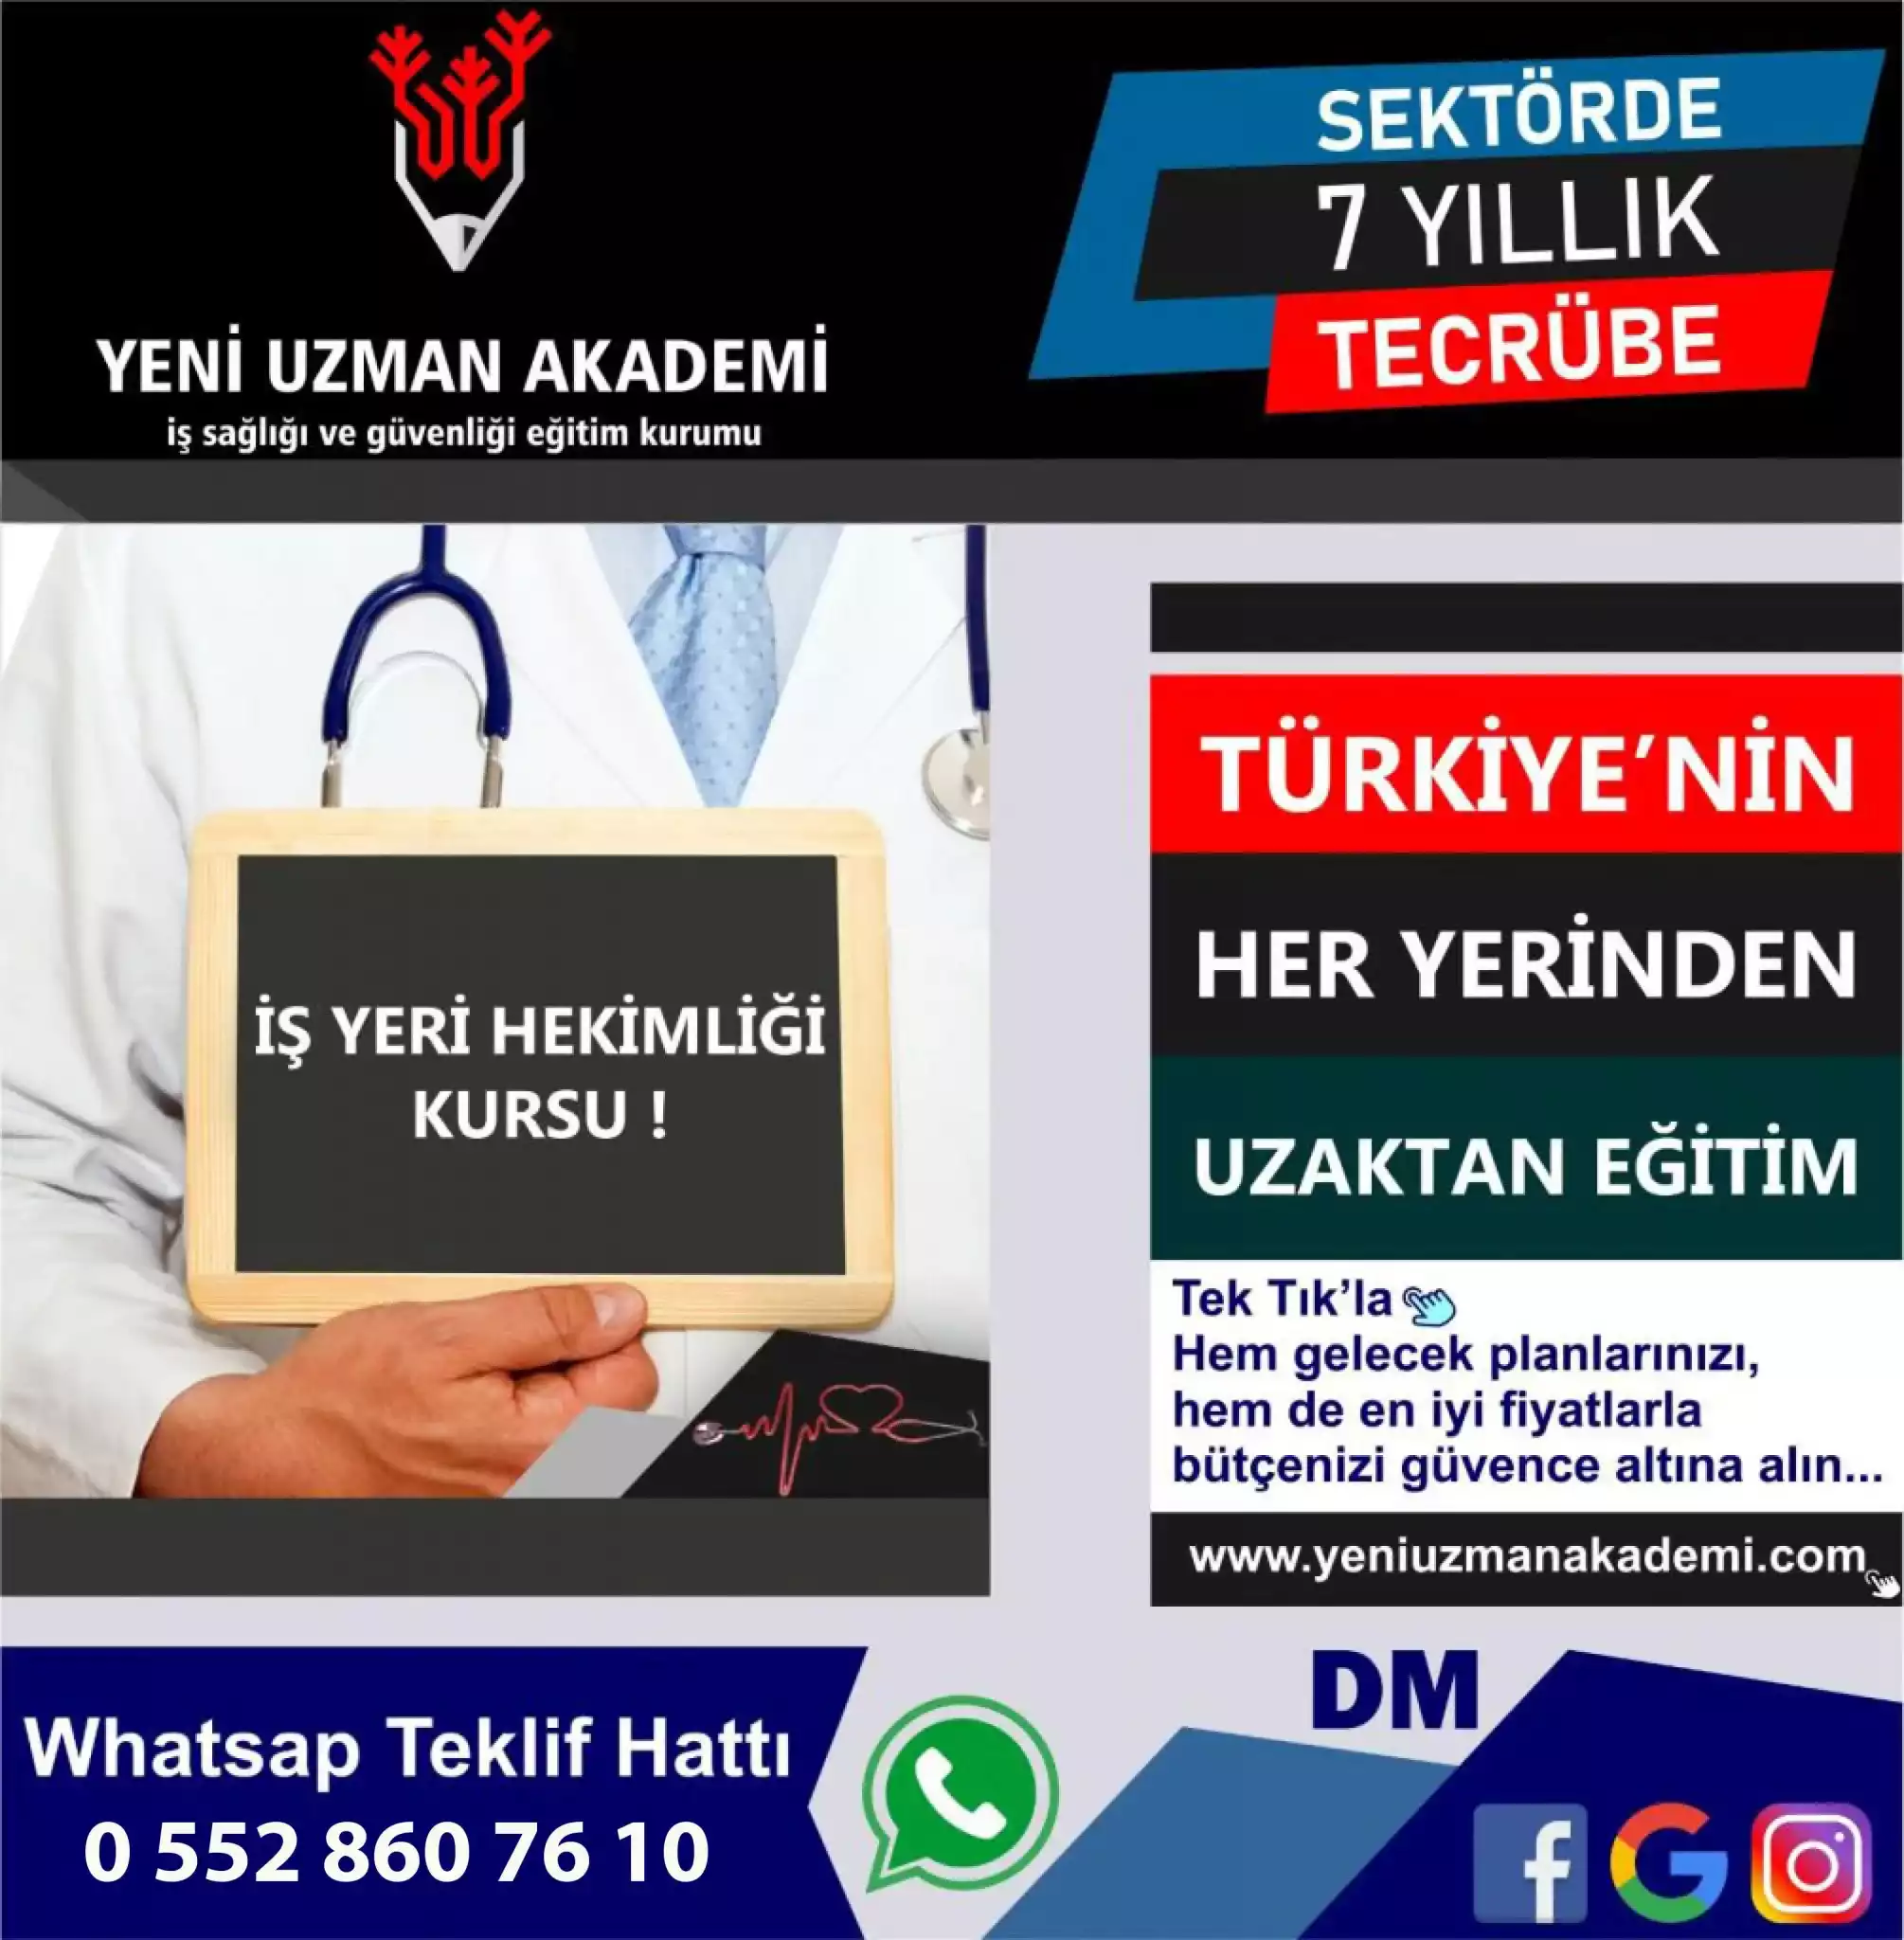 Ankara İşyeri Hekimliği Kursu, İSG Eğitimi / İş Güvenliği Kursu / İSG Kursu